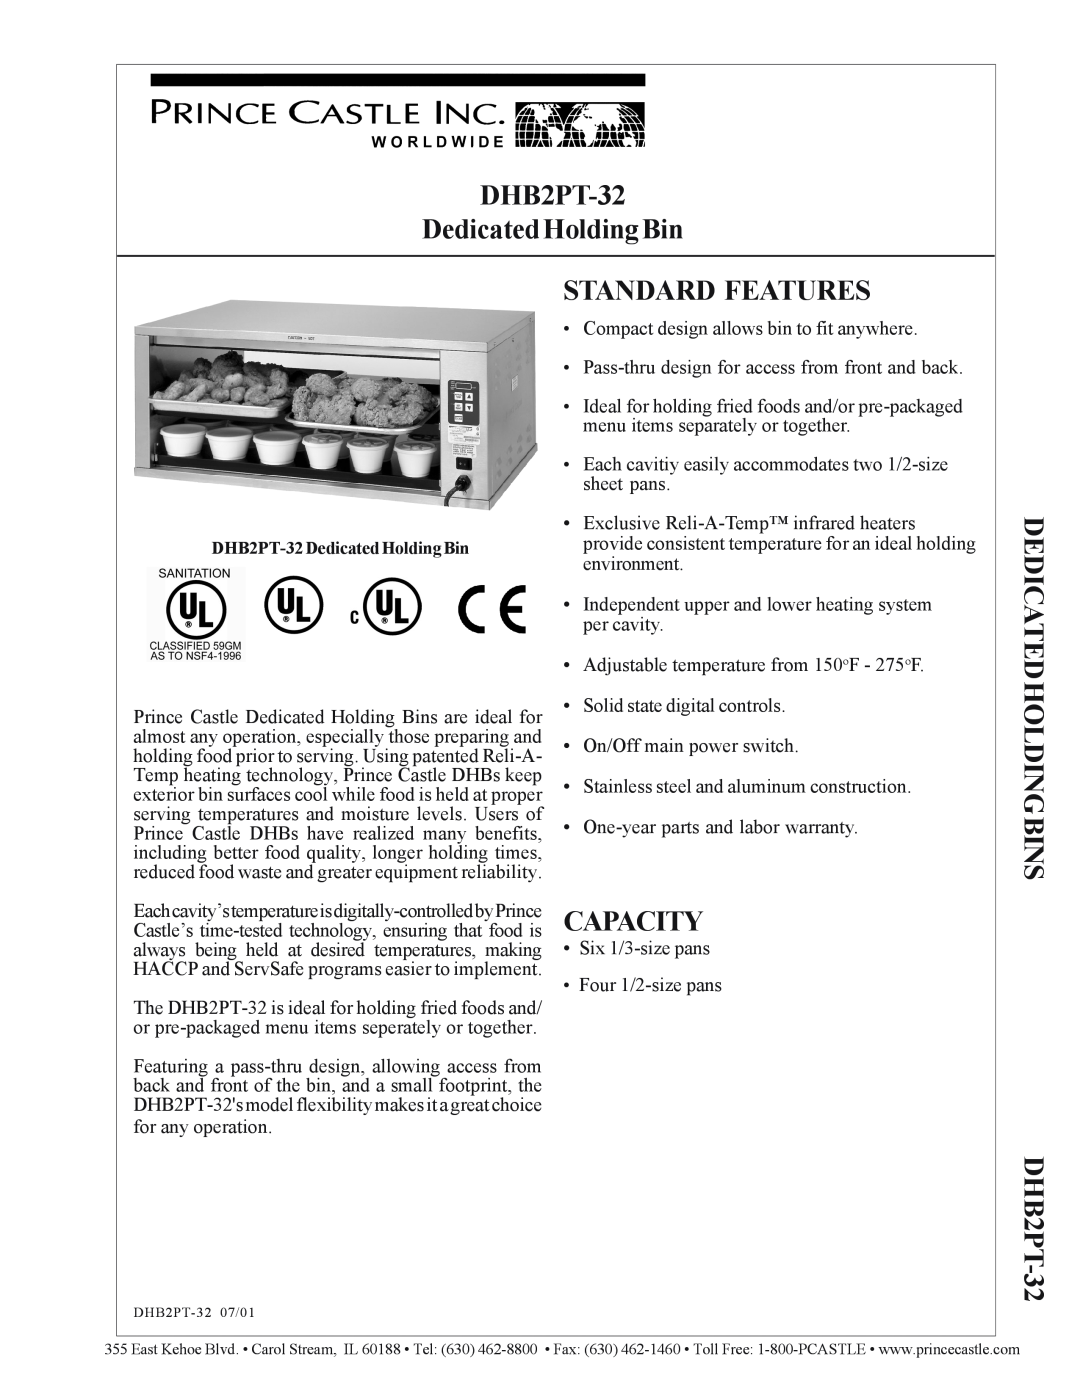 Prince Castle warranty DHB2PT-32 DedicatedHoldingBin, Standard Features, Dedicatedholdingbins, Capacity 